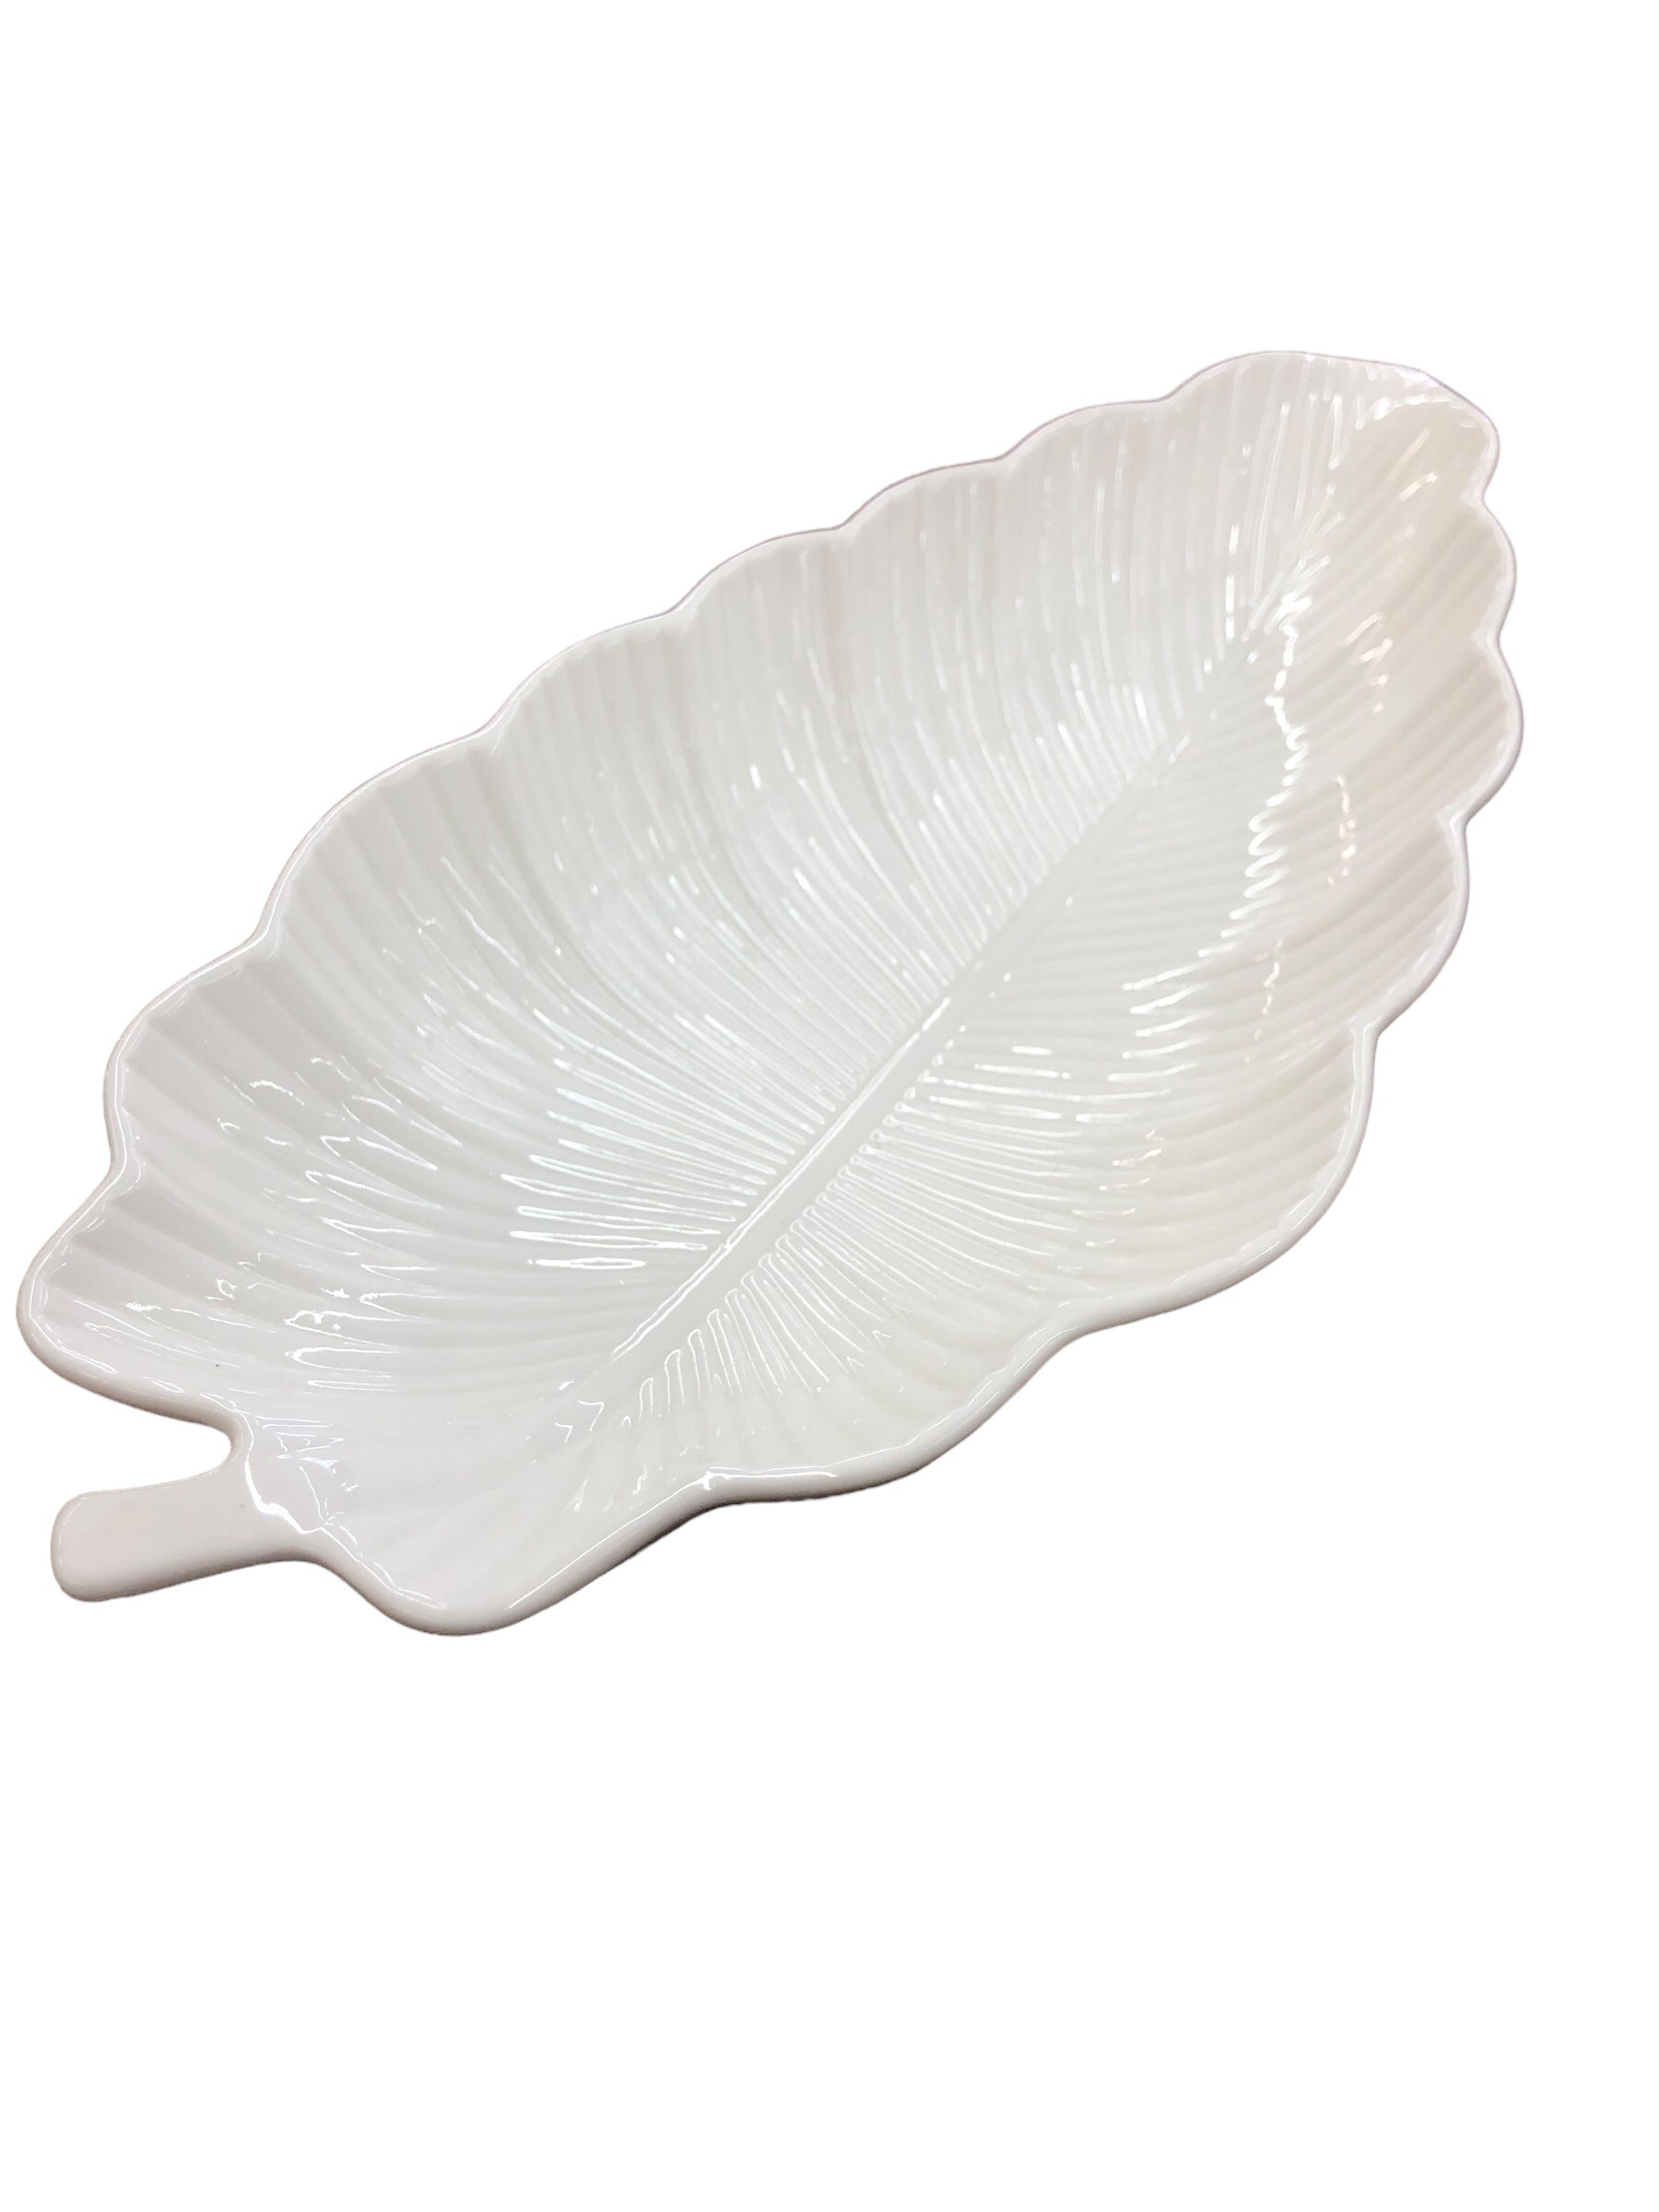 White Ceramic Leaf Dish